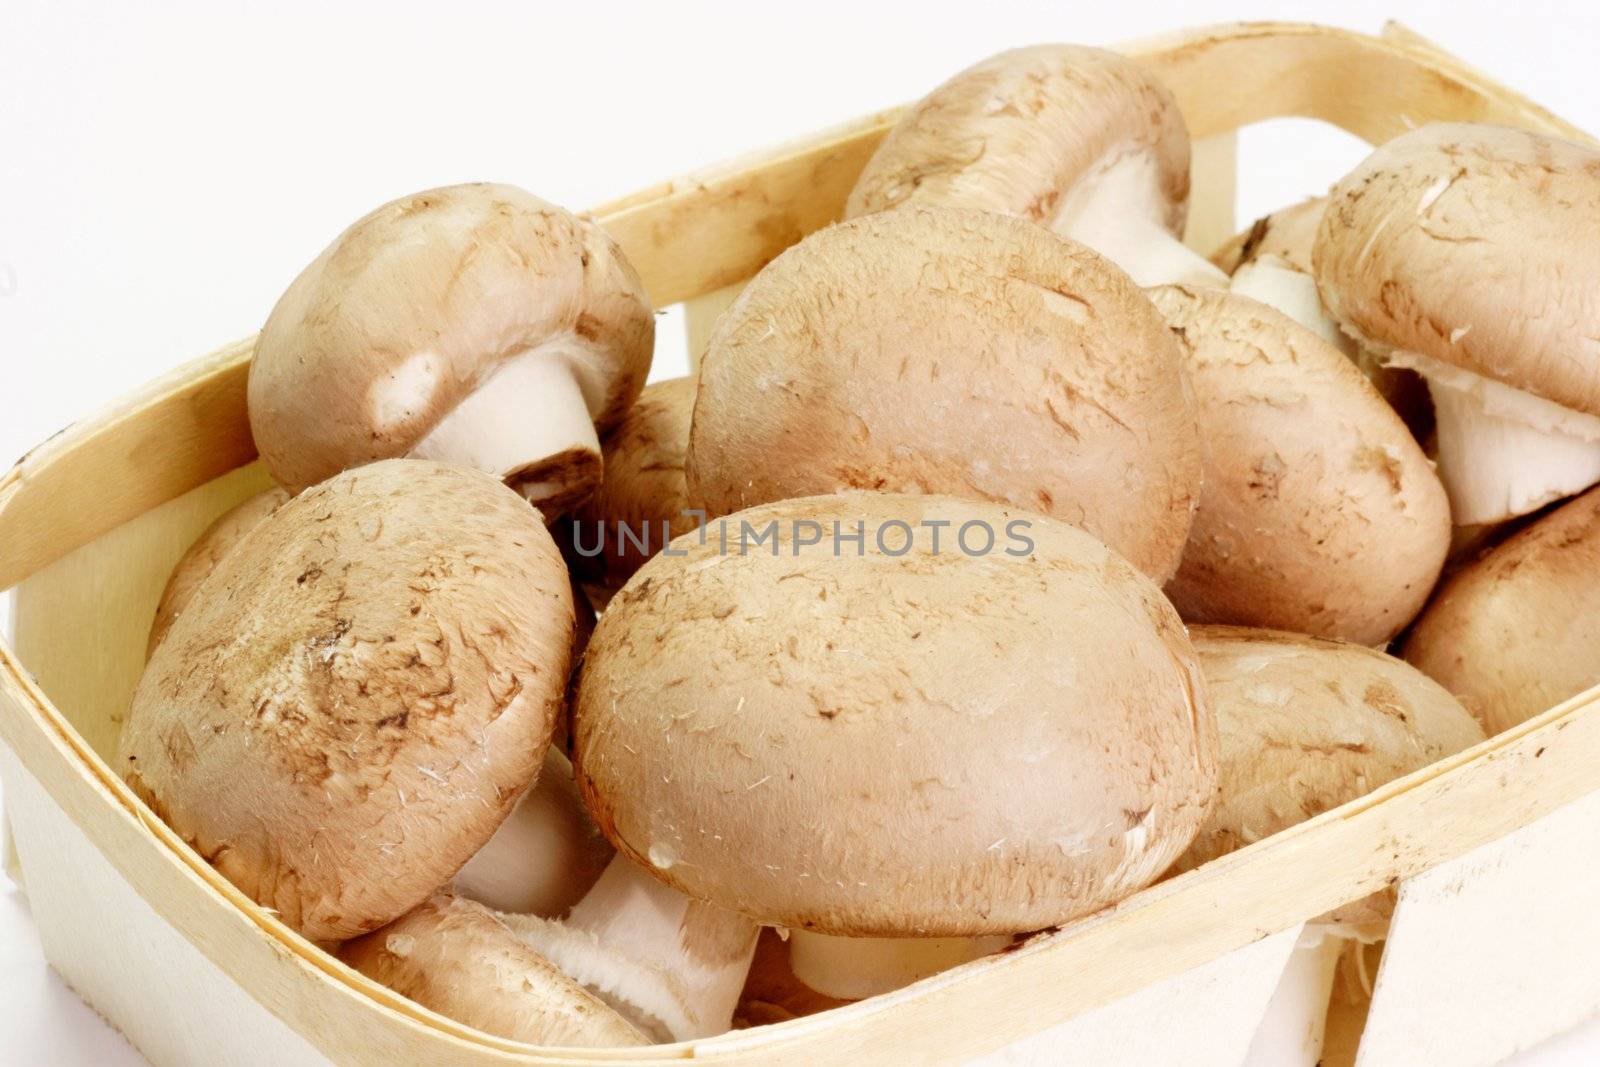 Mushrooms in a Basket by Teamarbeit